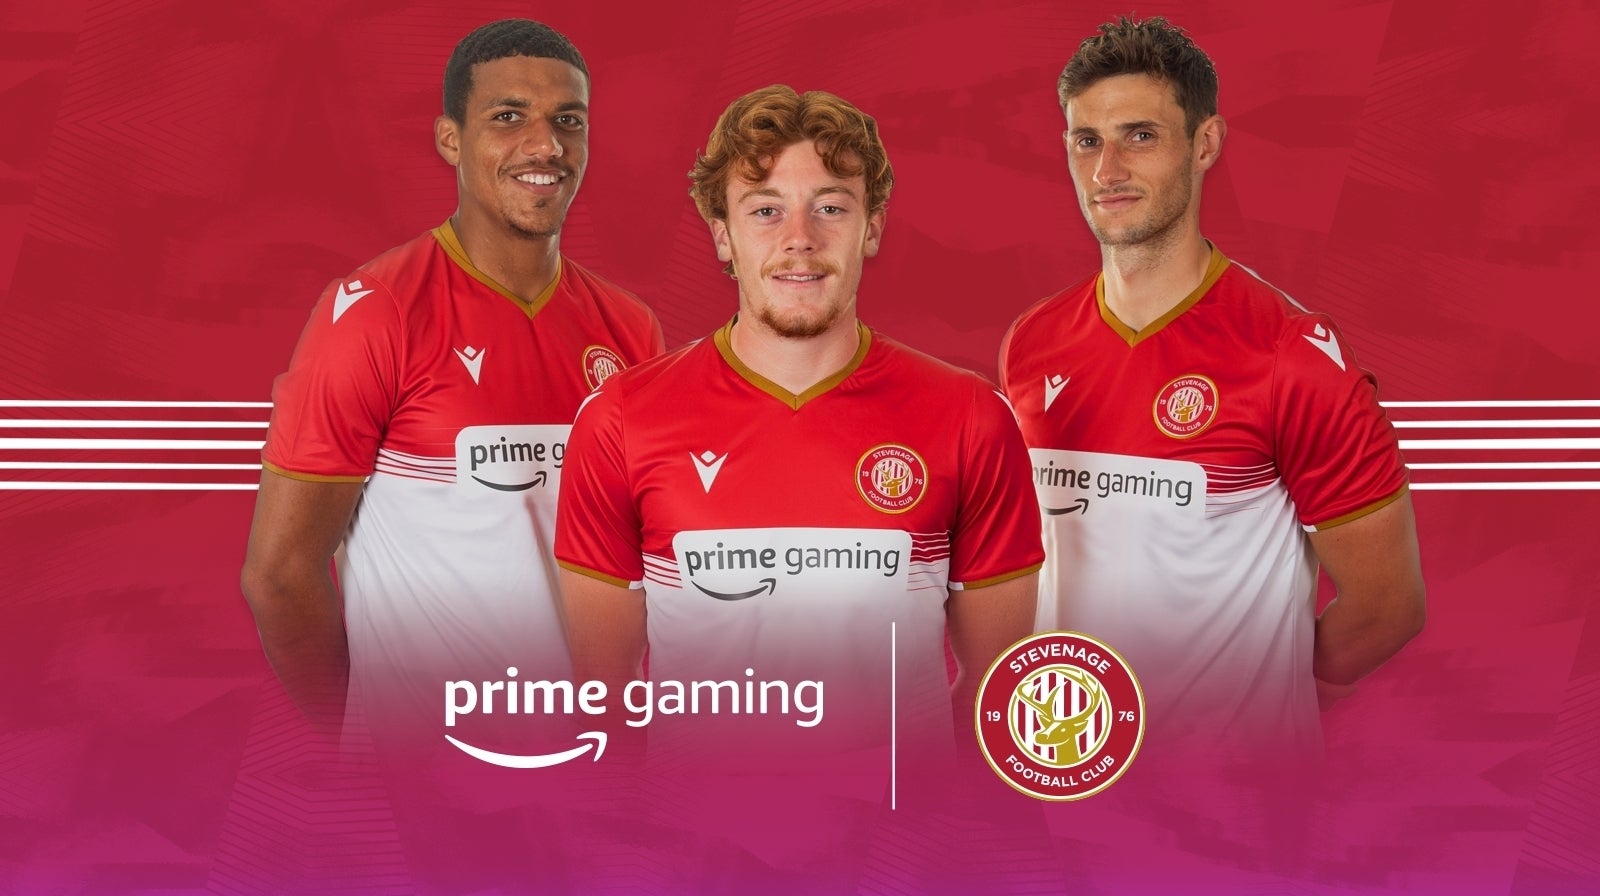 Amazon Prime Gaming signs shirt sponsorship deal with… Stevenage FC Eurogamer